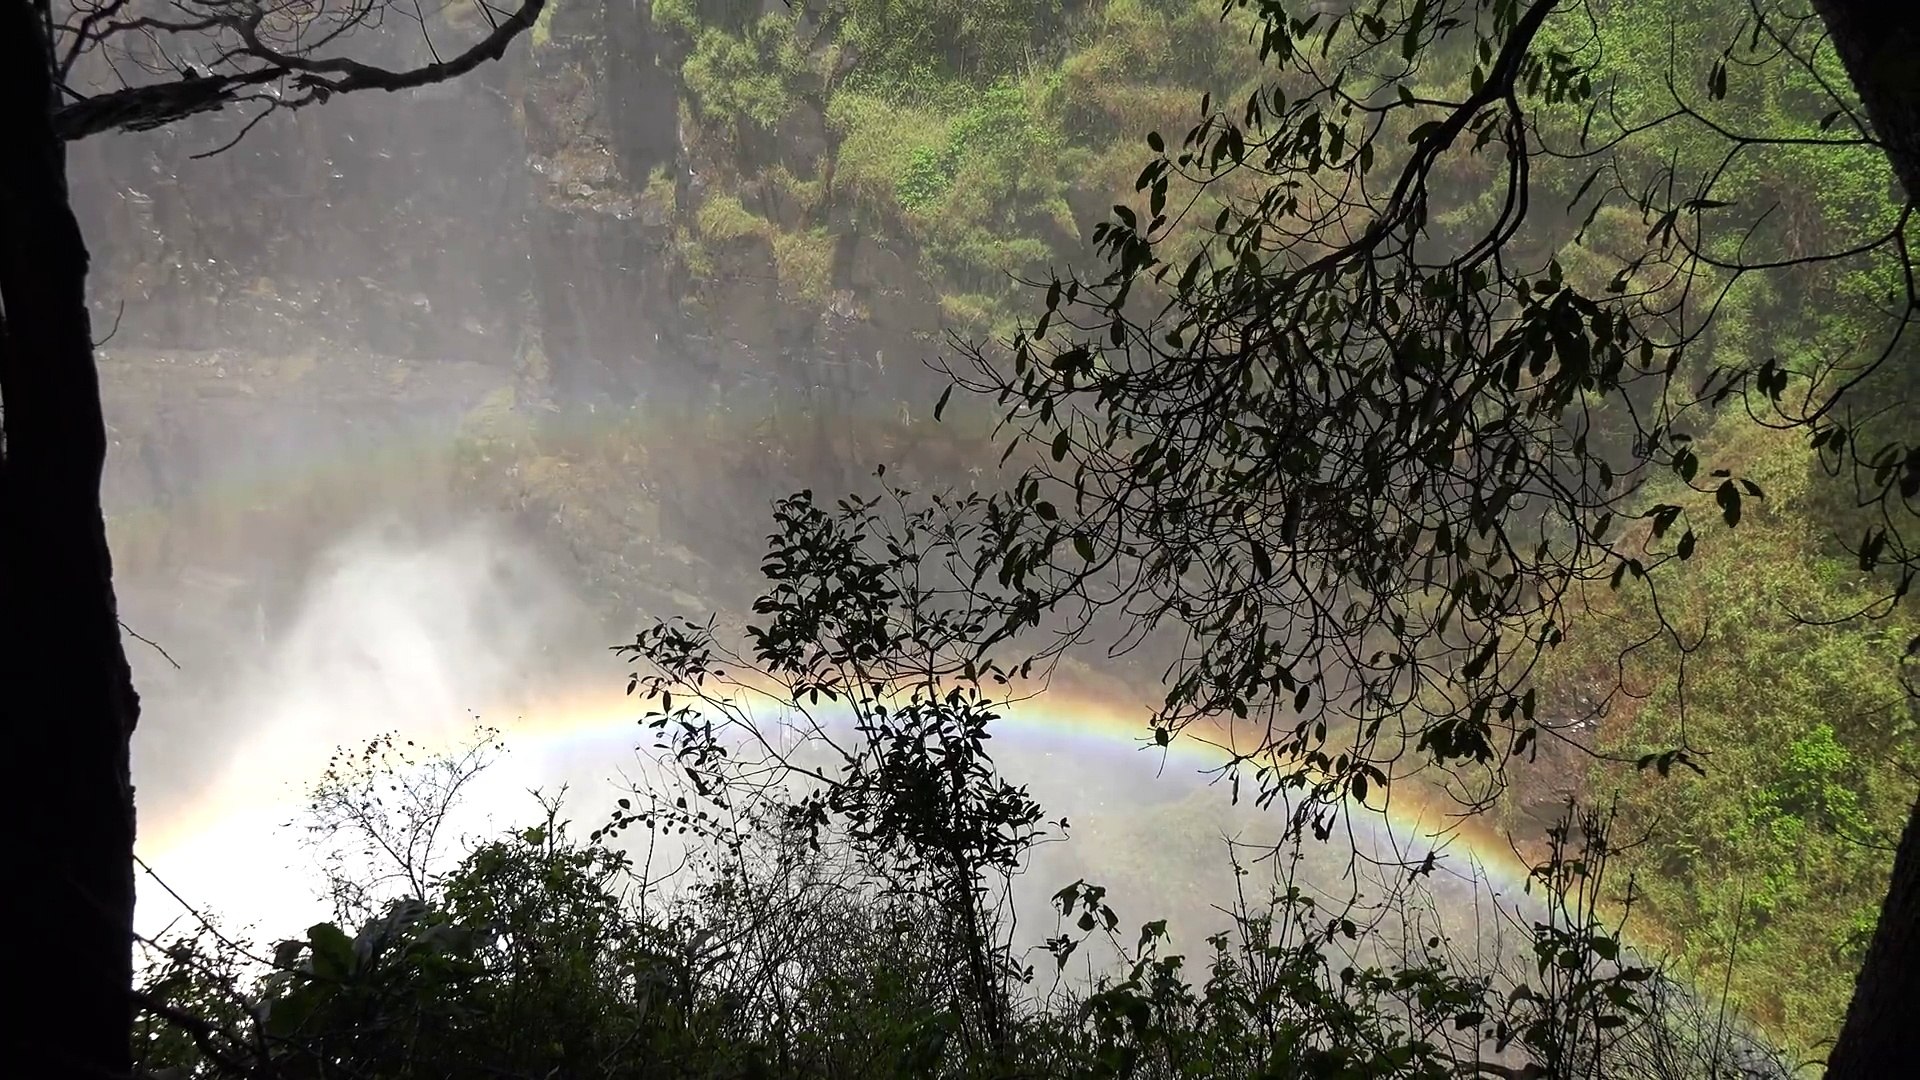 Victoria Falls, Zambia & Zimbabwe in 4K Ultra HD